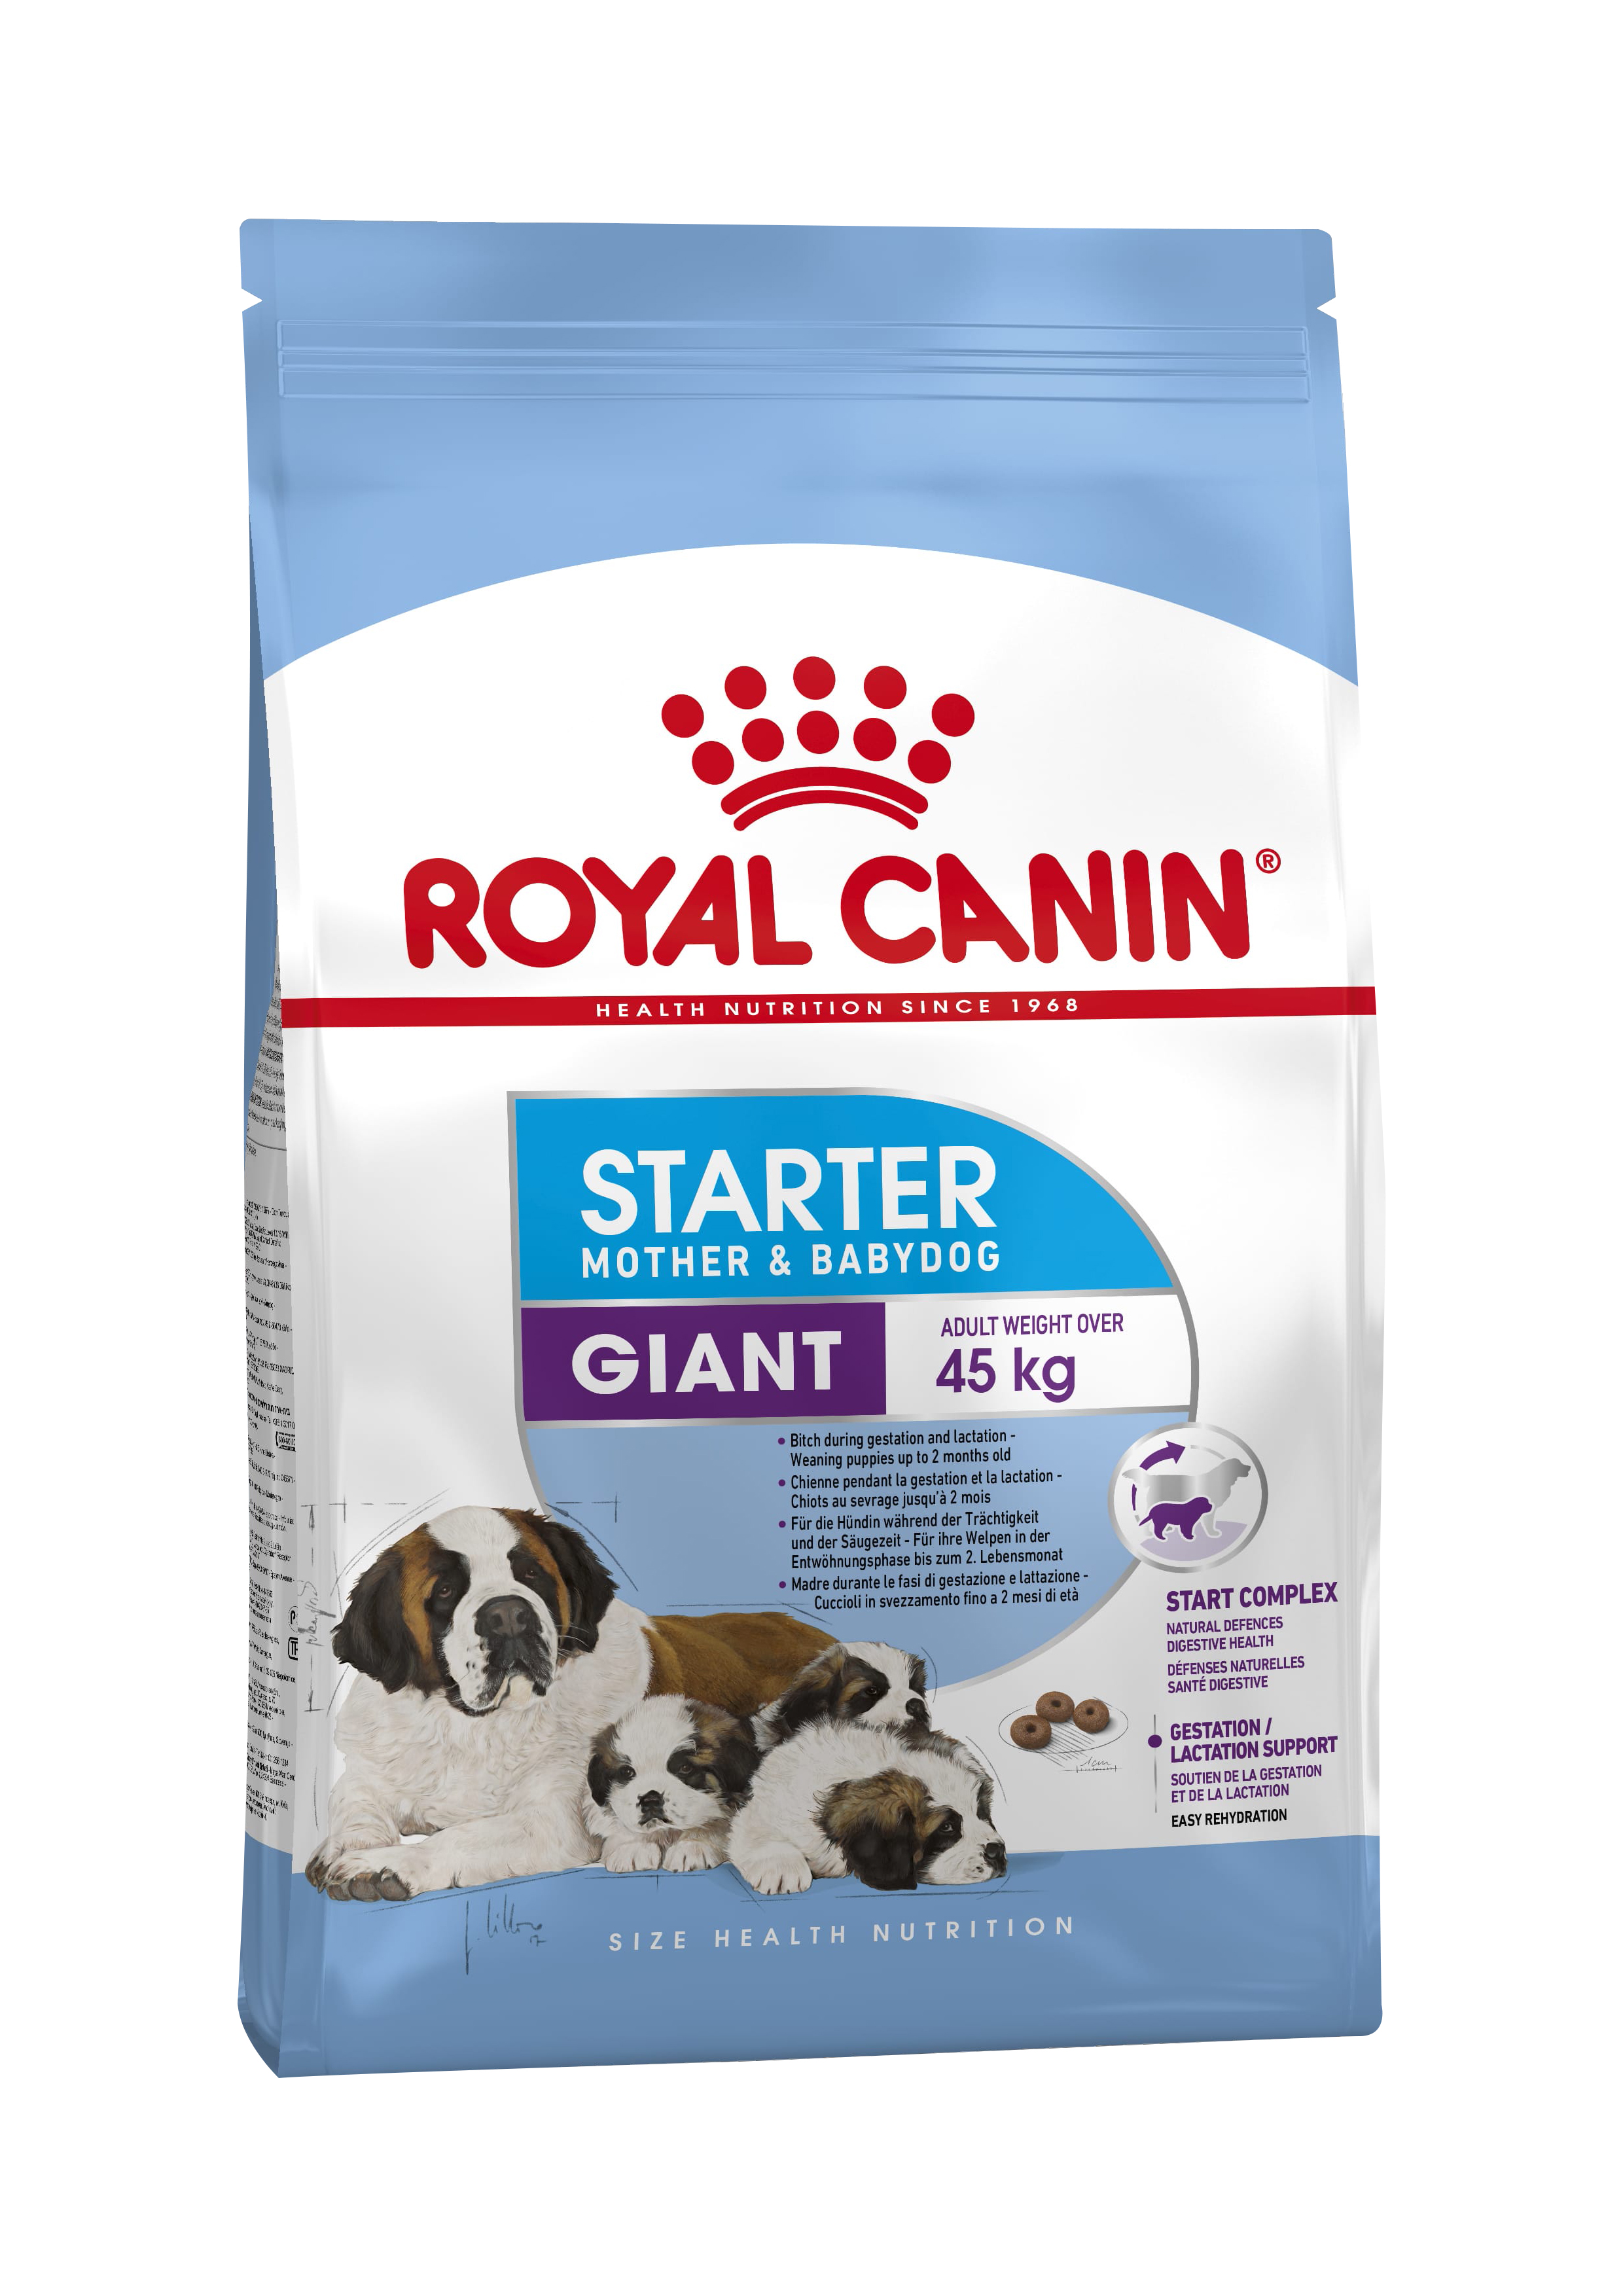 Royal Canin Starter Mother & Baby Dog Giant 1kg